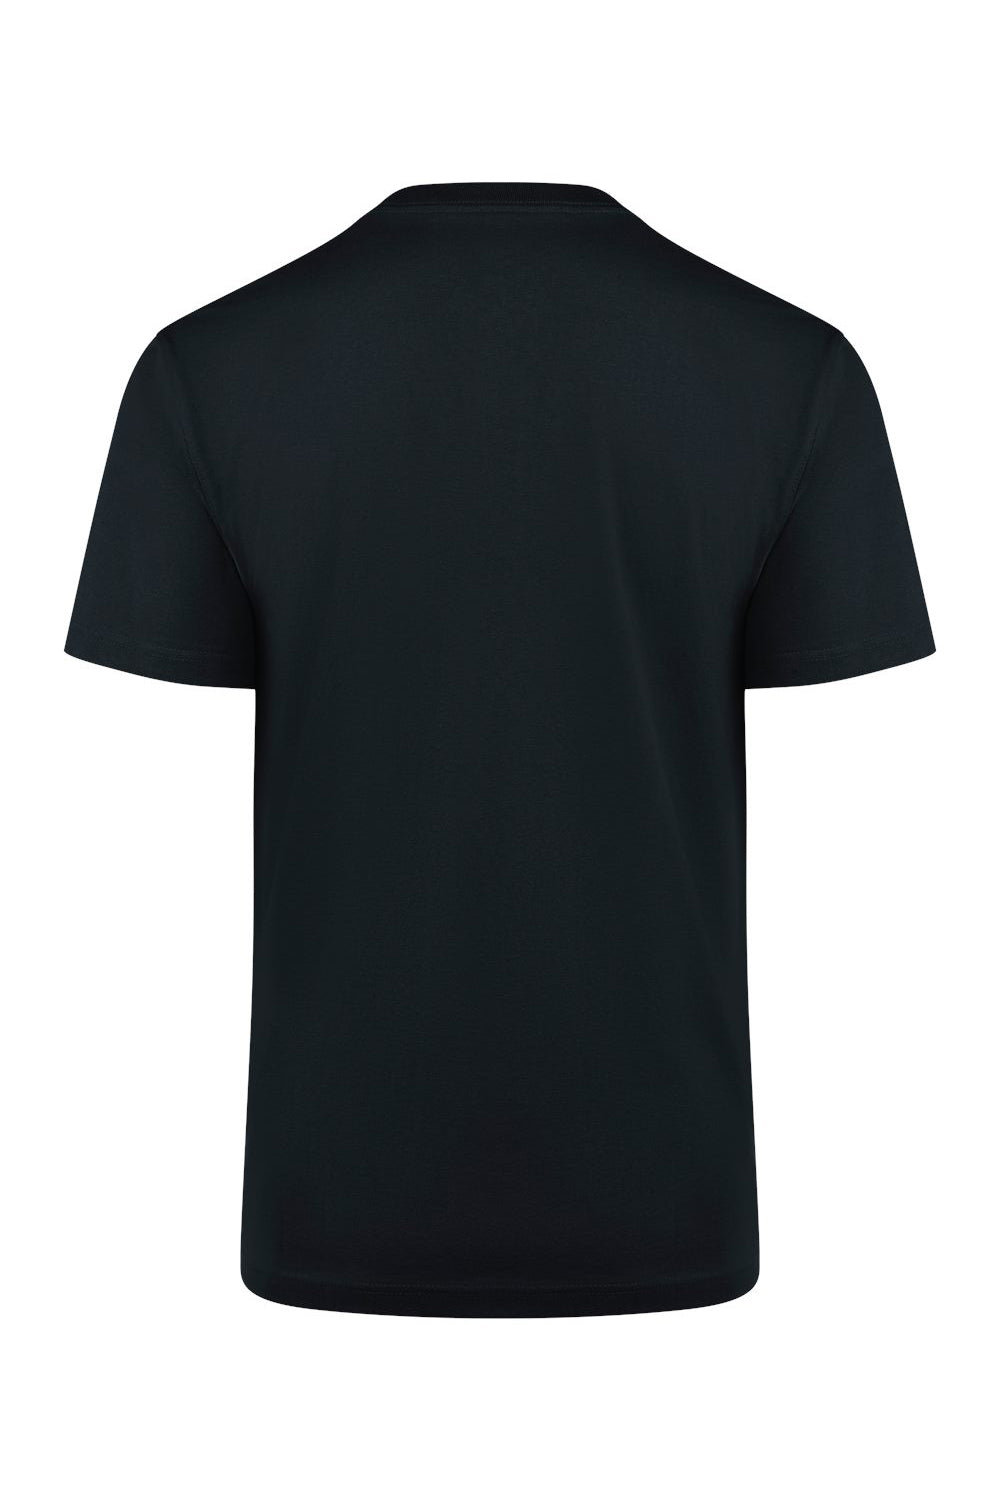 Dickies WS50-D Mens Traditional Short Sleeve Crewneck T-Shirt w/ Pocket Black Flat Back